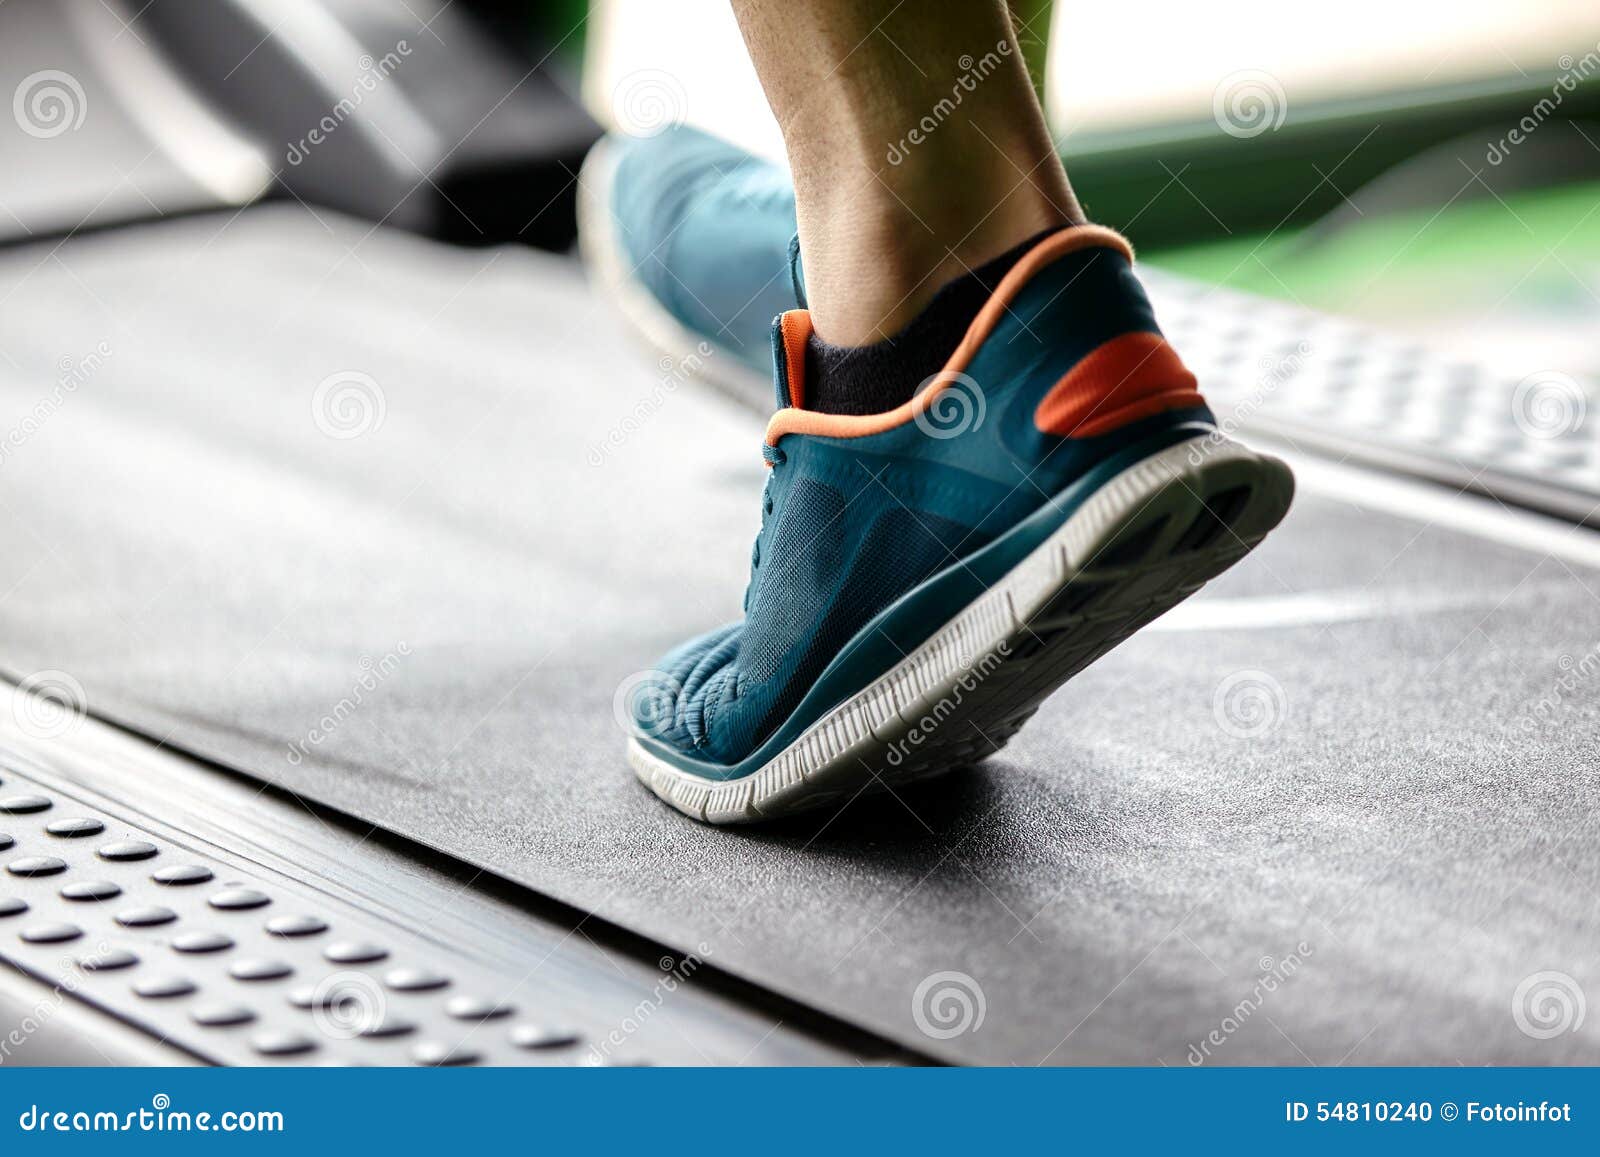 Treadmill ικανότητας. Άτομο που τρέχει σε μια σύγχρονη γυμναστική σε μια treadmill έννοια για την άσκηση, την ικανότητα και τον υγιή τρόπο ζωής